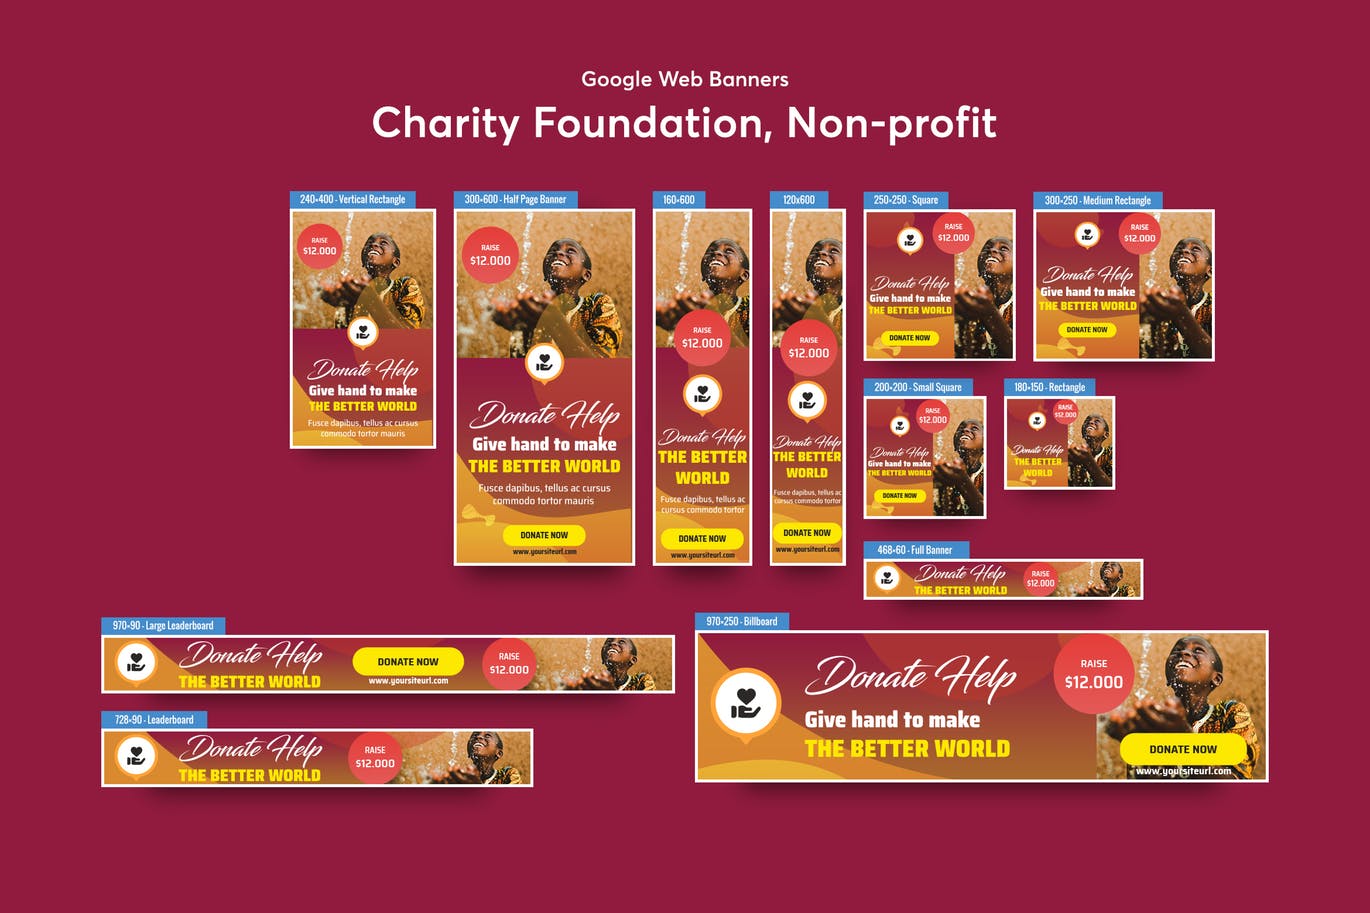 慈善基金会非营利组织推广Banner蚂蚁素材精选广告模板 Charity Foundation, Non-profit Banners Ad插图